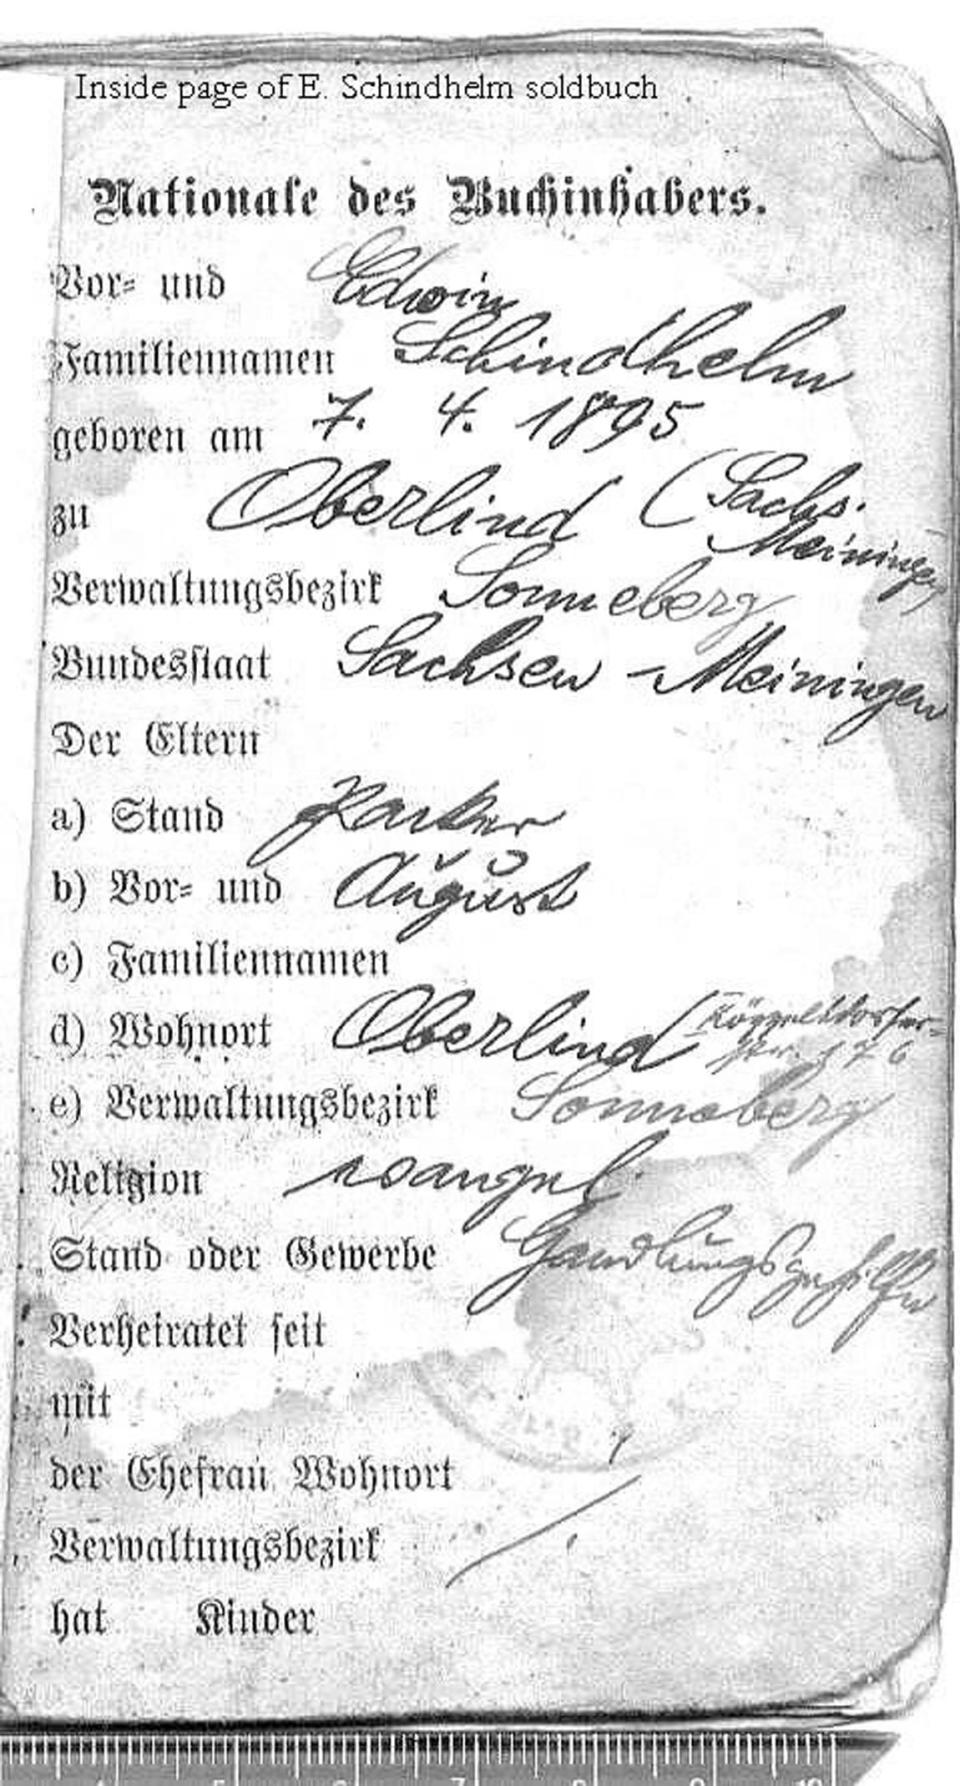 Diary of German Soldier (inside 1)